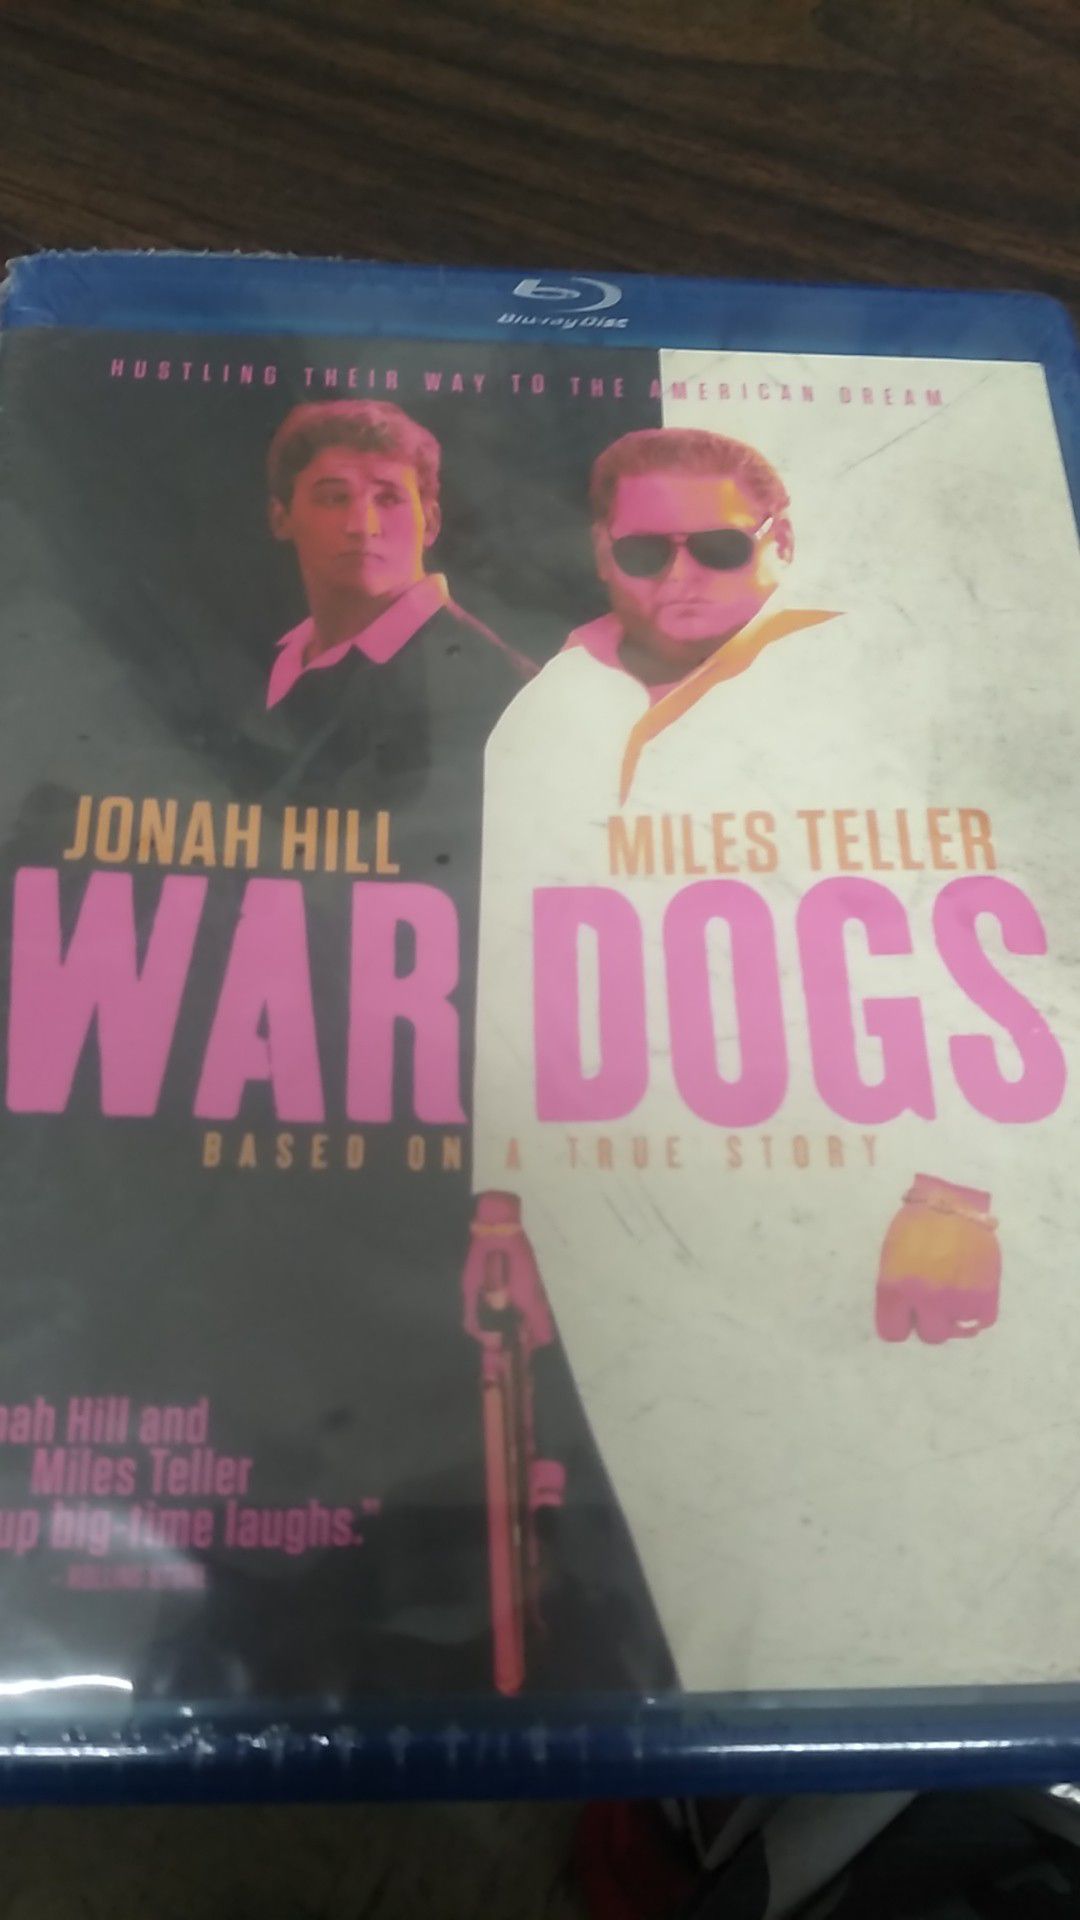 Blu-ray DVD war dogs